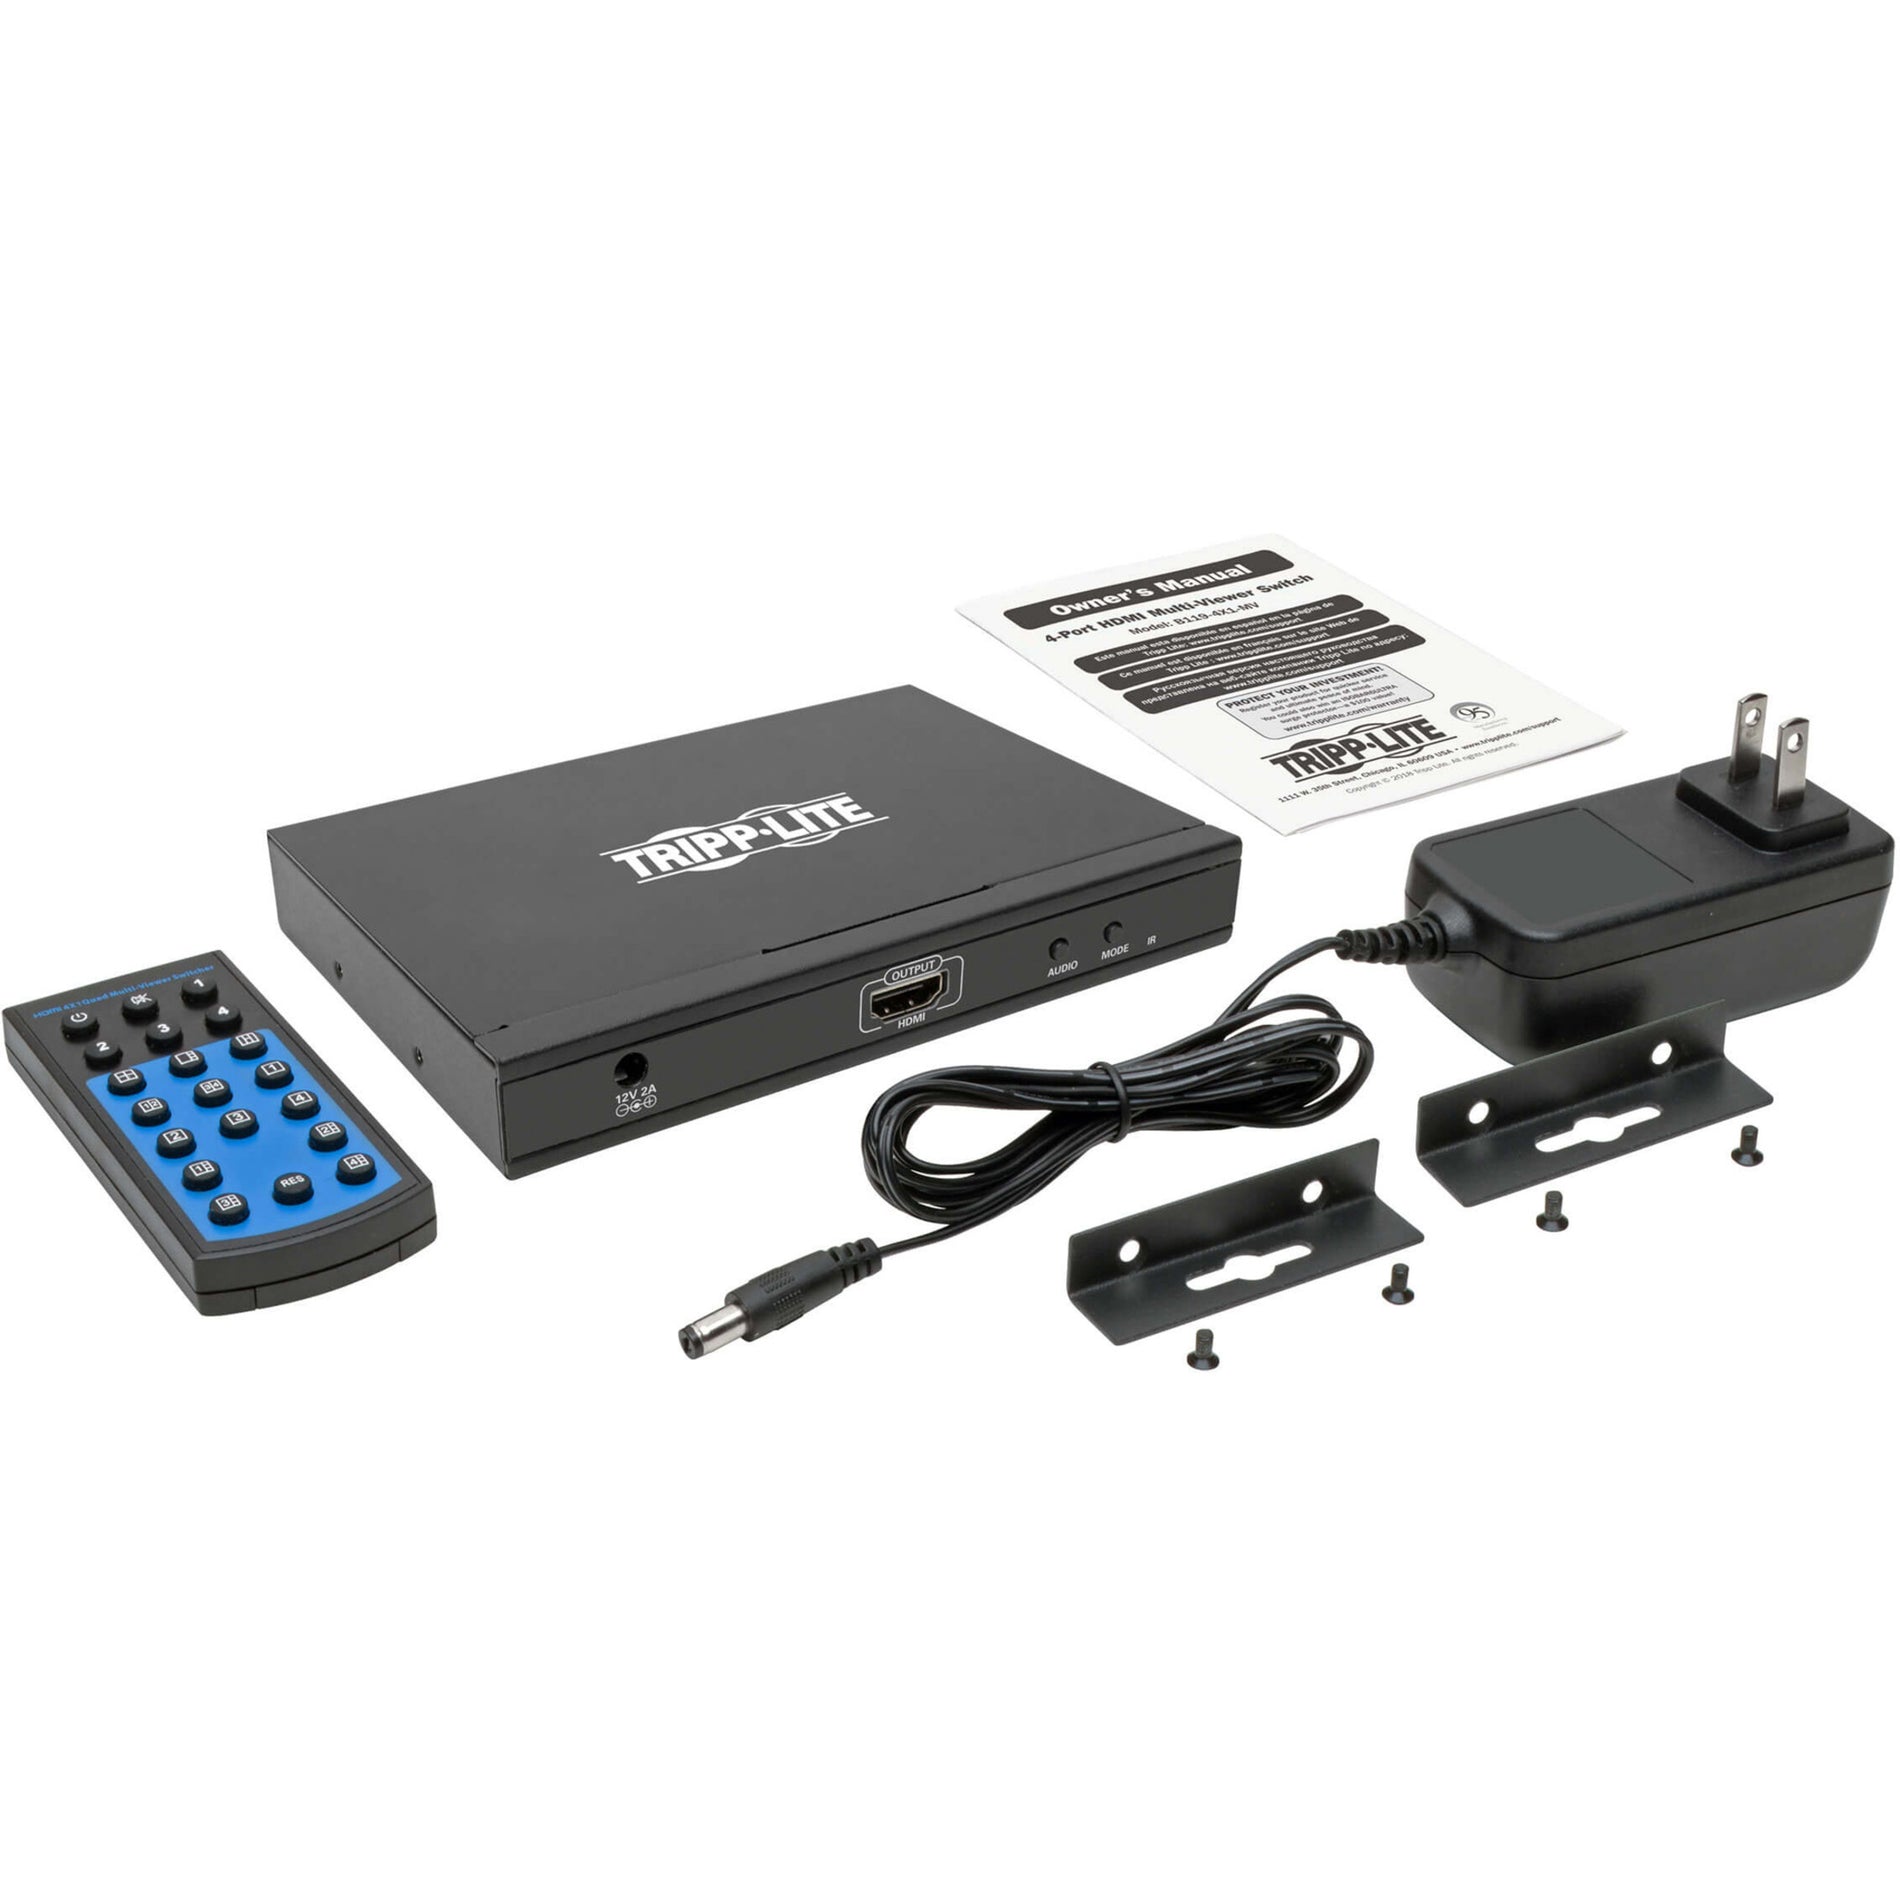 Tripp Lite B119-4X1-MV HDMI Quad Multi-Viewer Switch, 4-Port 1080p @ 60Hz w/ Built-in IR